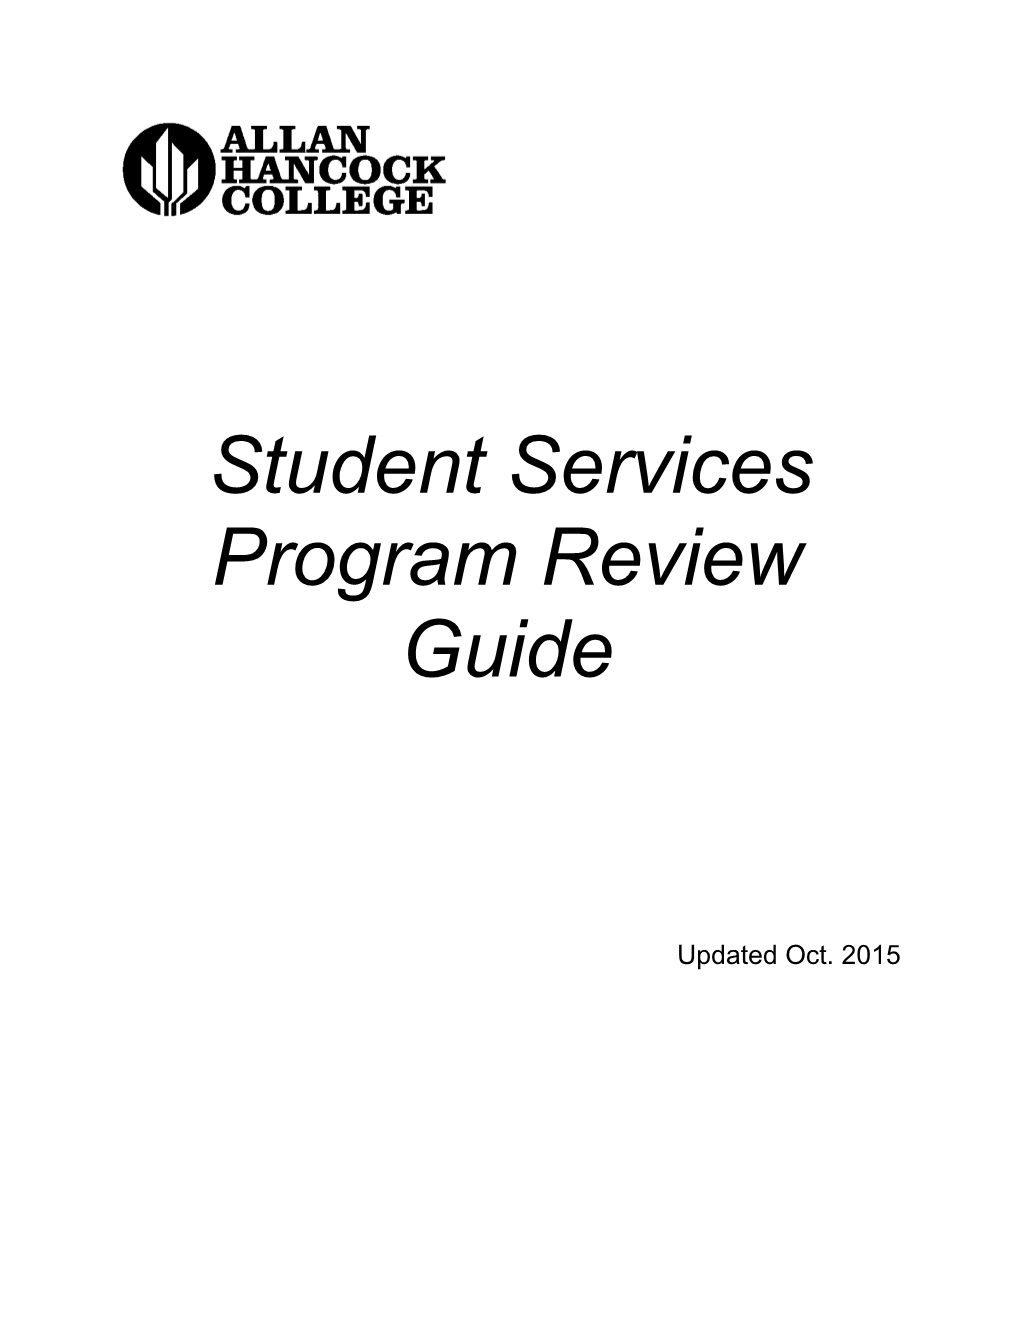 Student Services Program Review Components